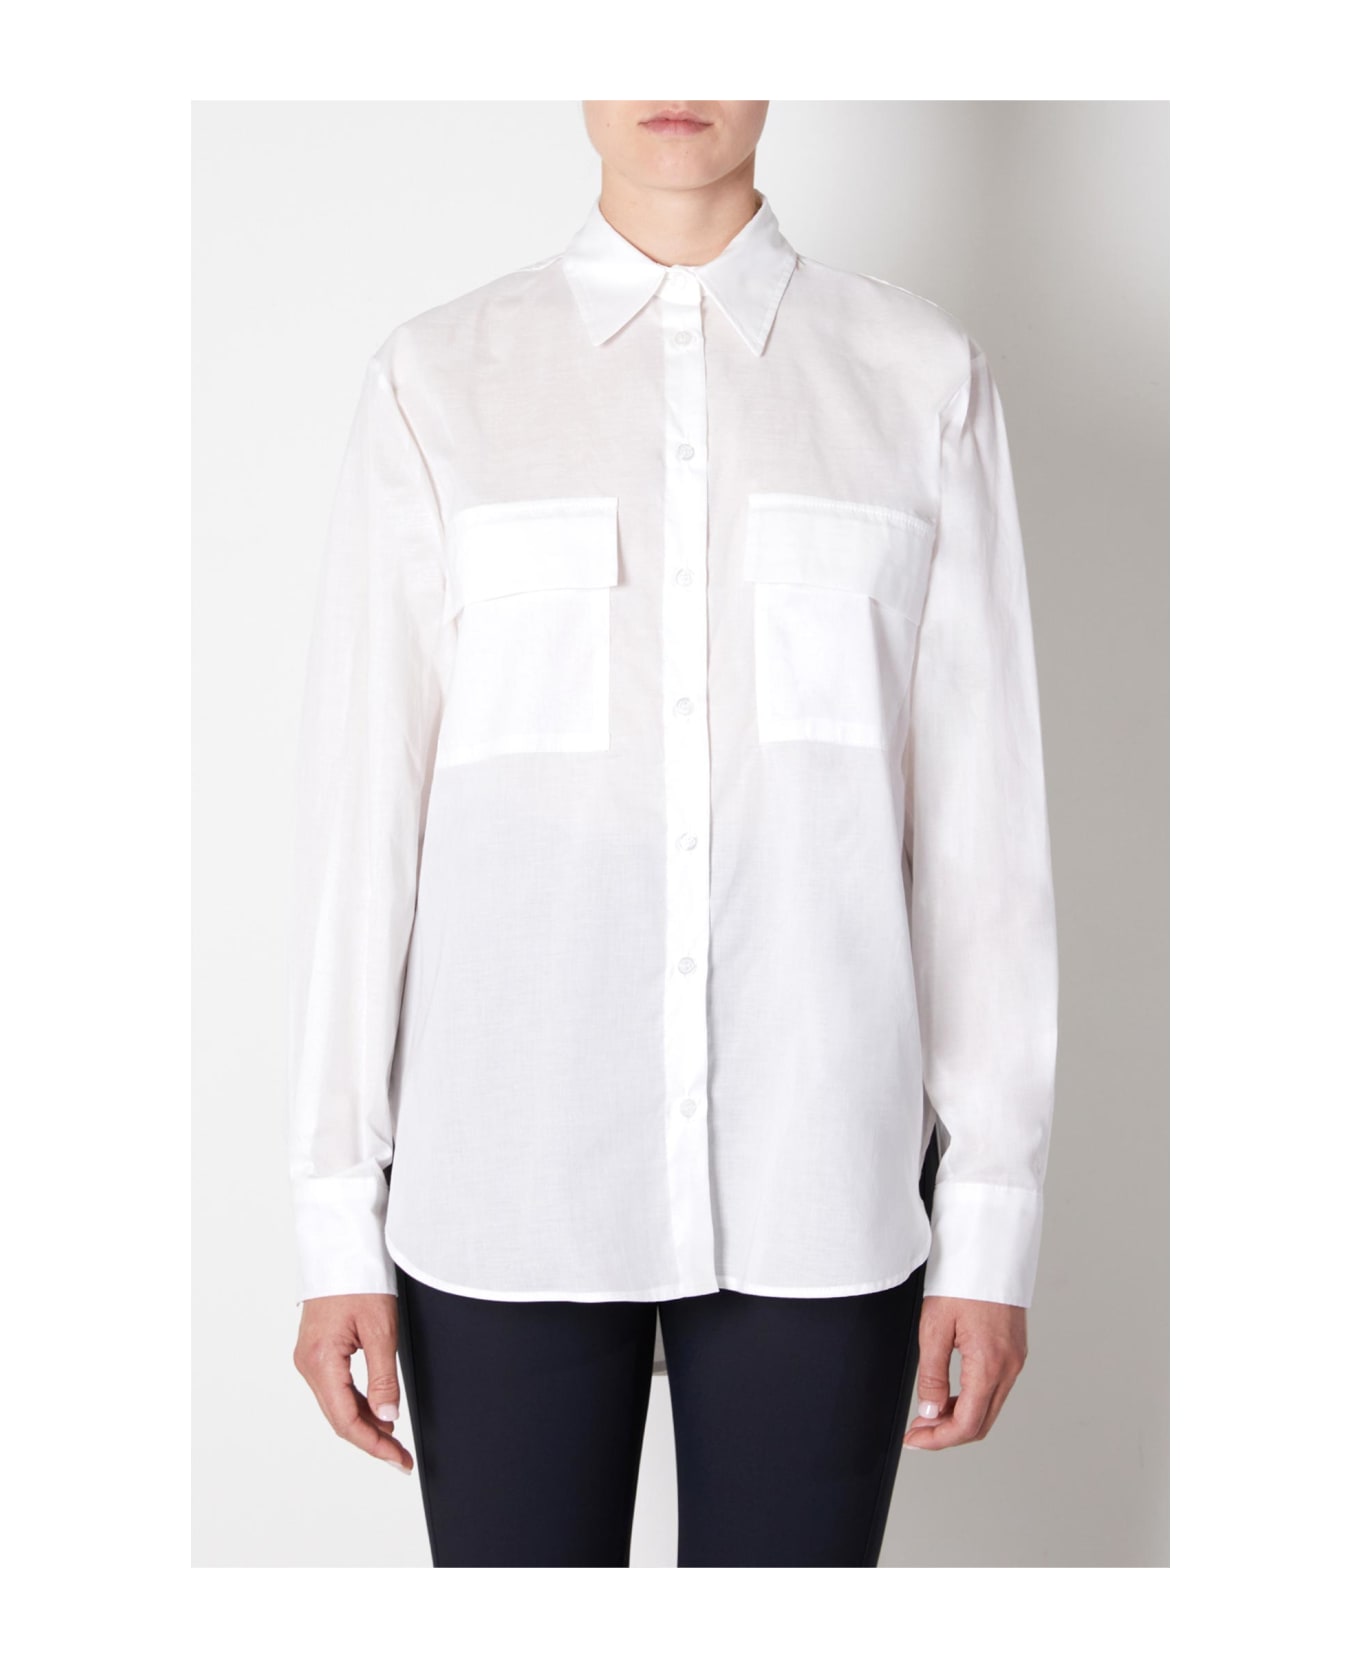 Kaos White Shirt With Pockets - PANNA